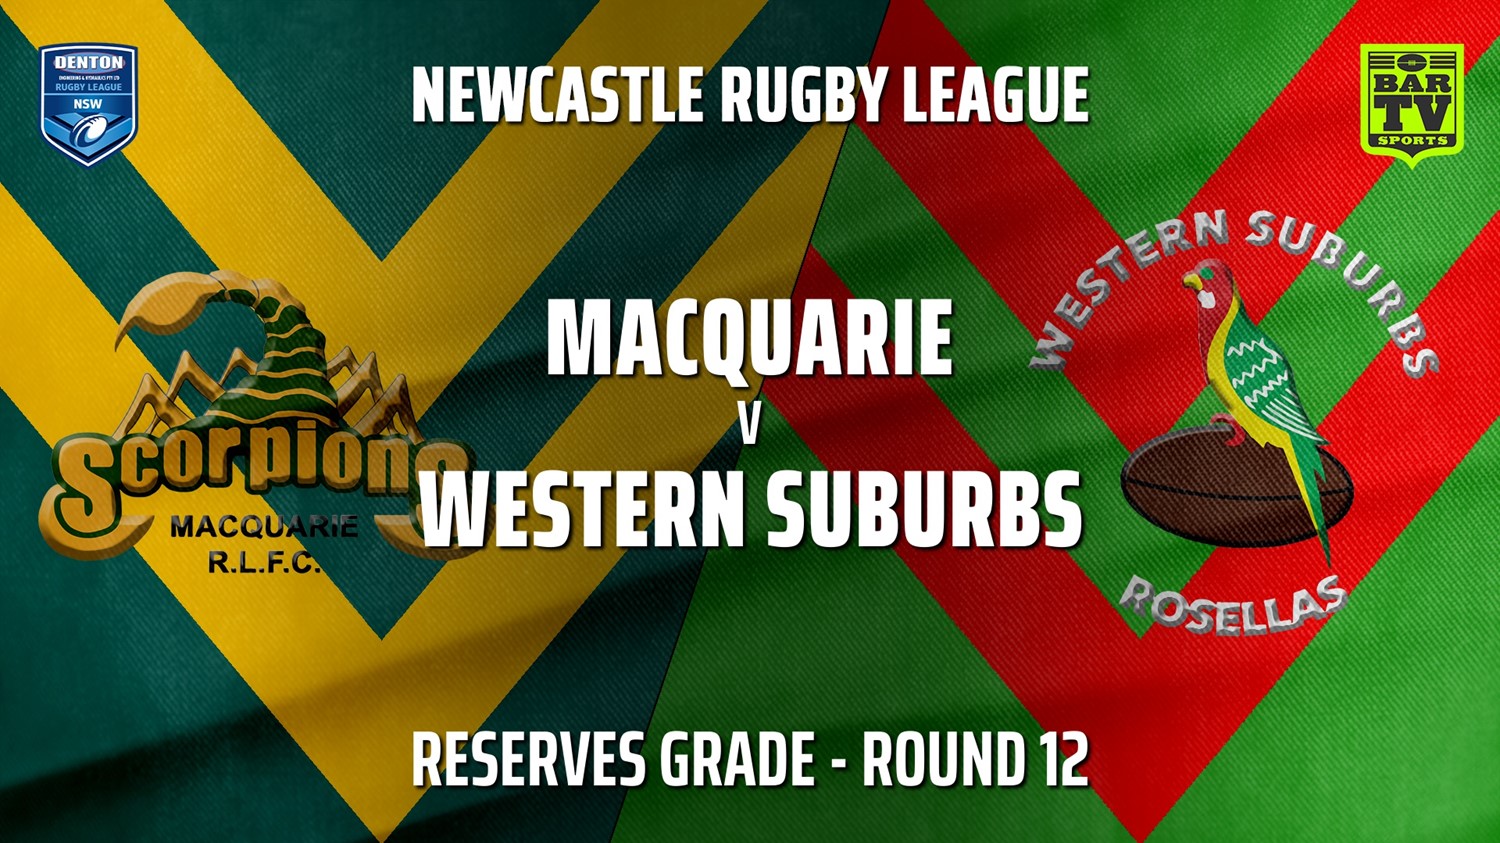 210620-Newcastle Round 12 - Reserves Grade - Macquarie Scorpions v Western Suburbs Rosellas Slate Image